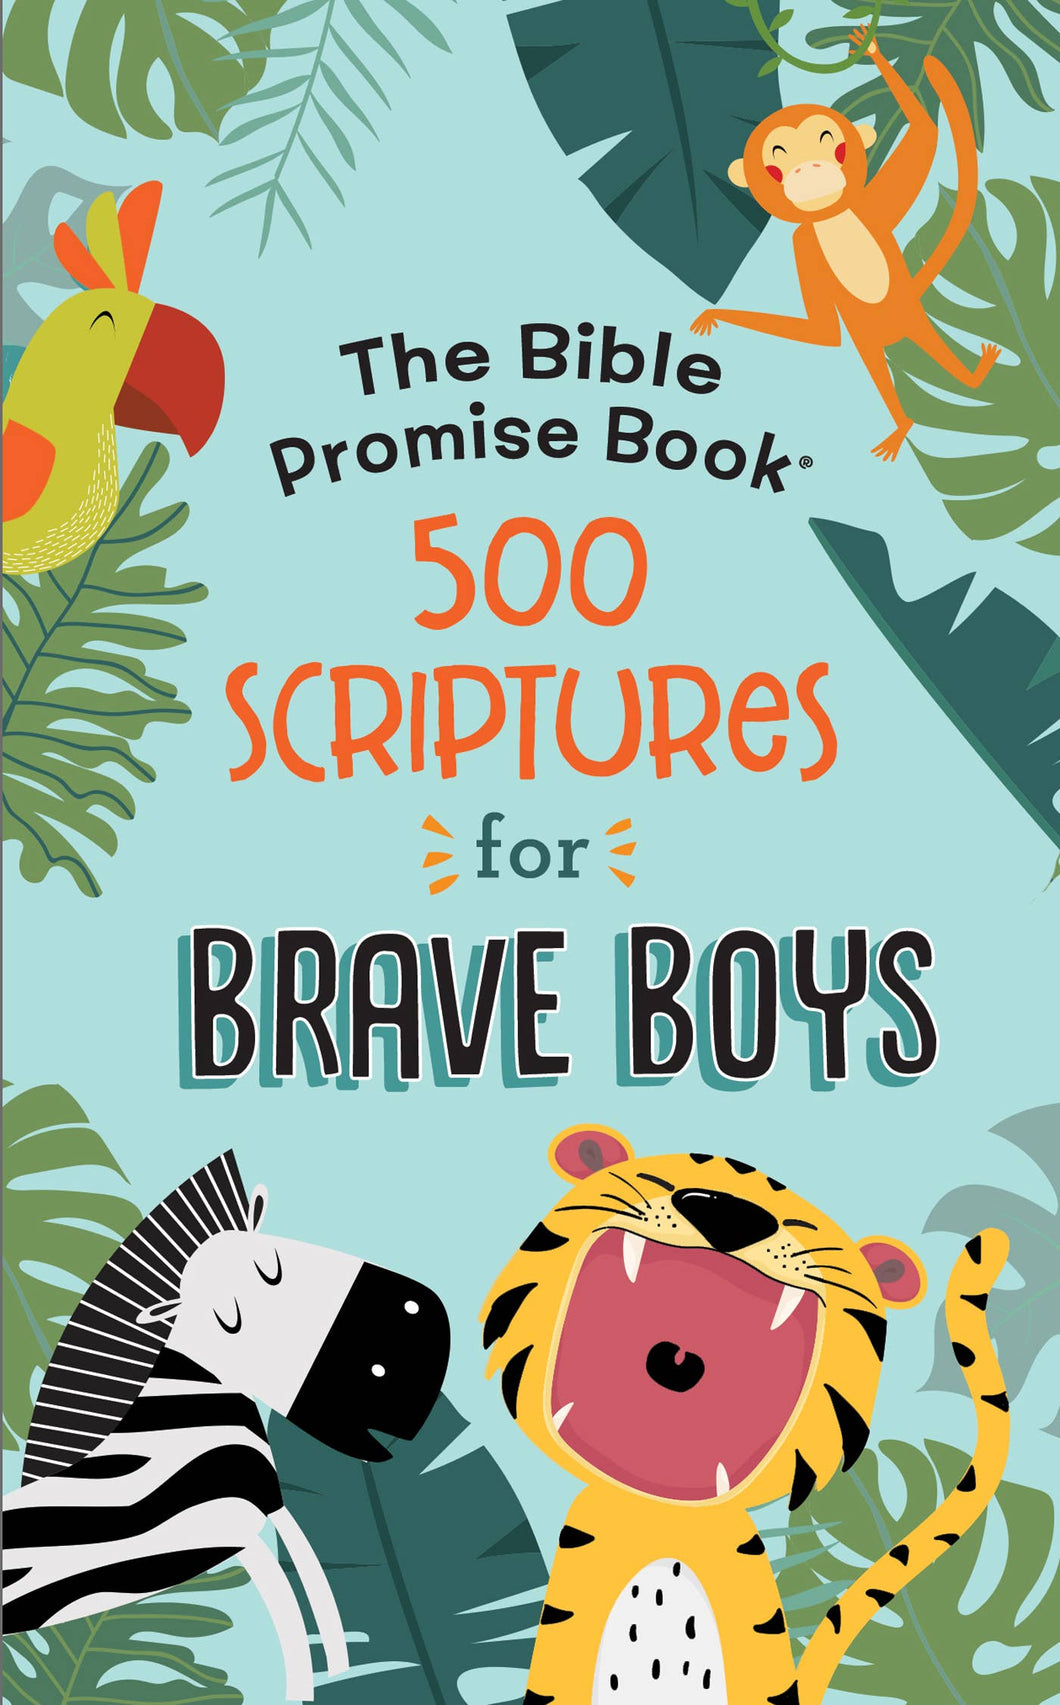 Book: 500 Scriptures for Brave Boys